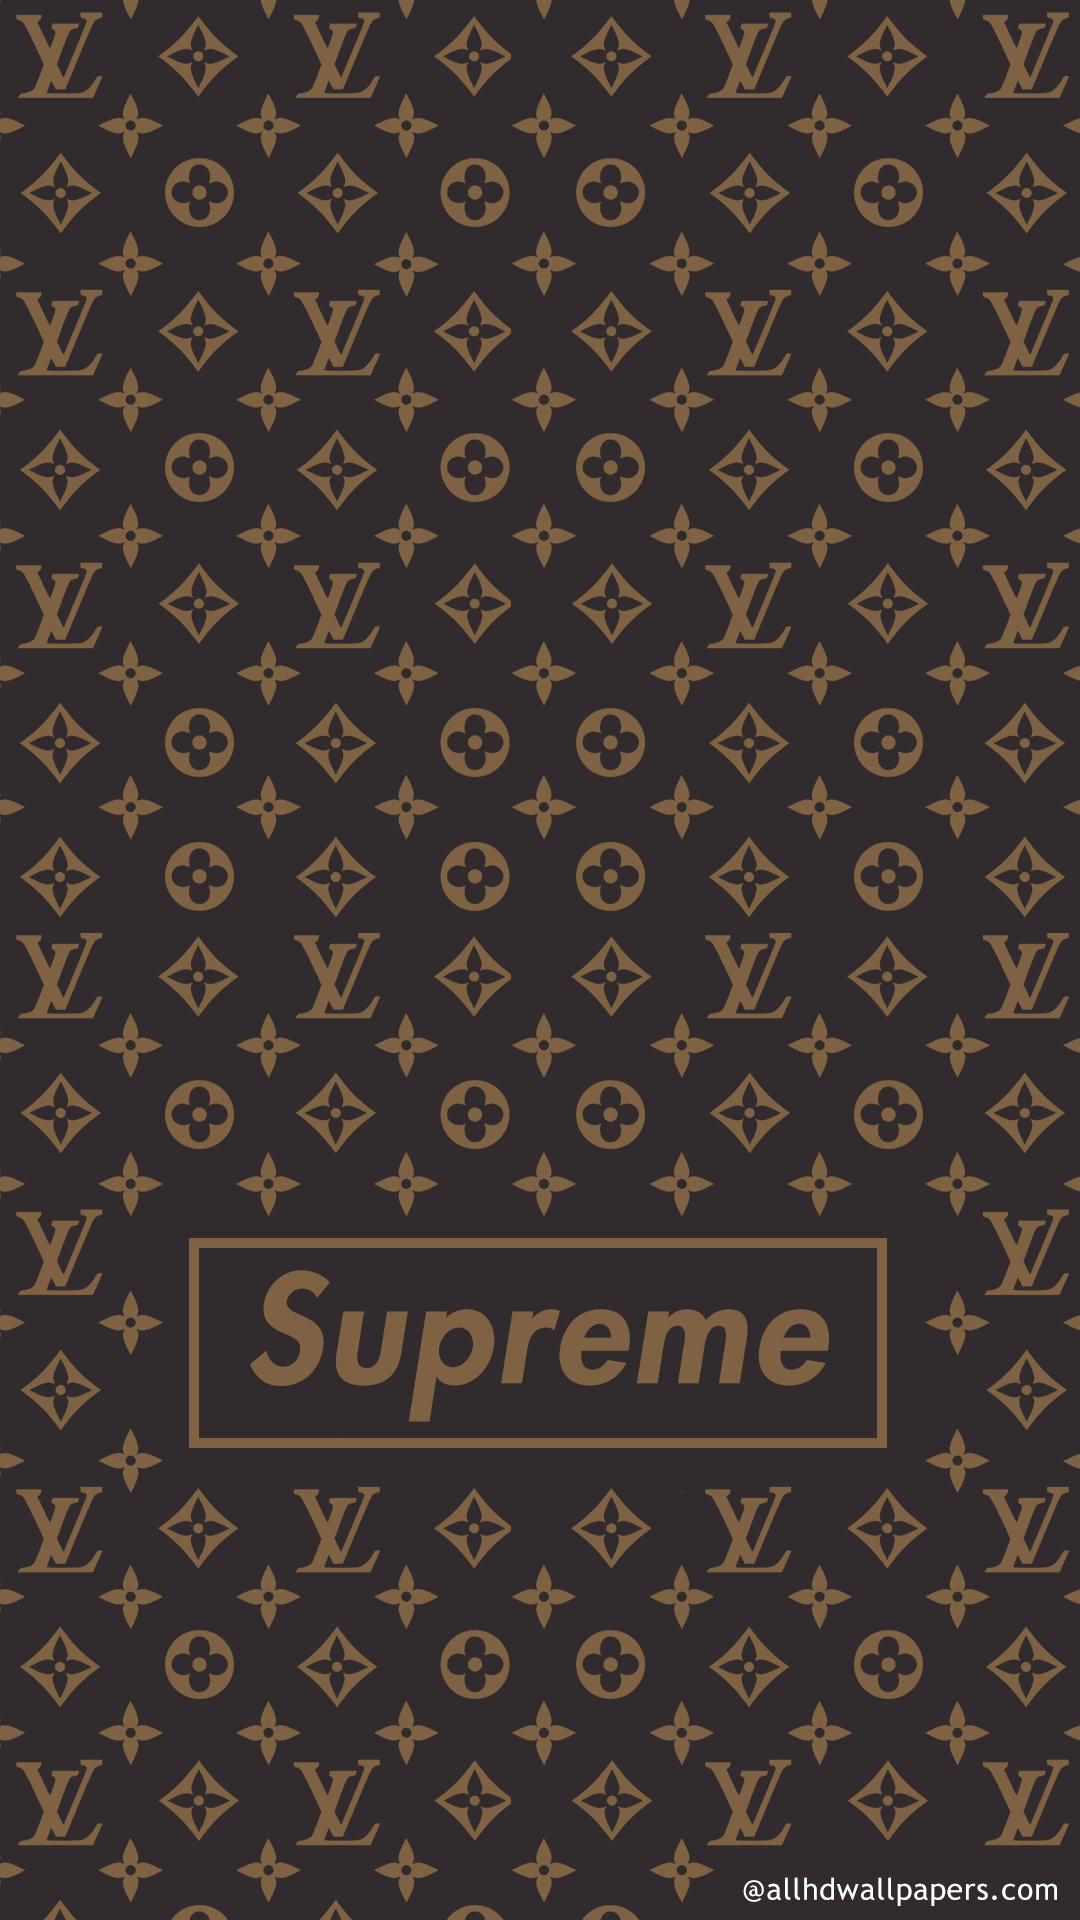 43 Supreme Nyc Wallpaper Iphone On Wallpapersafari